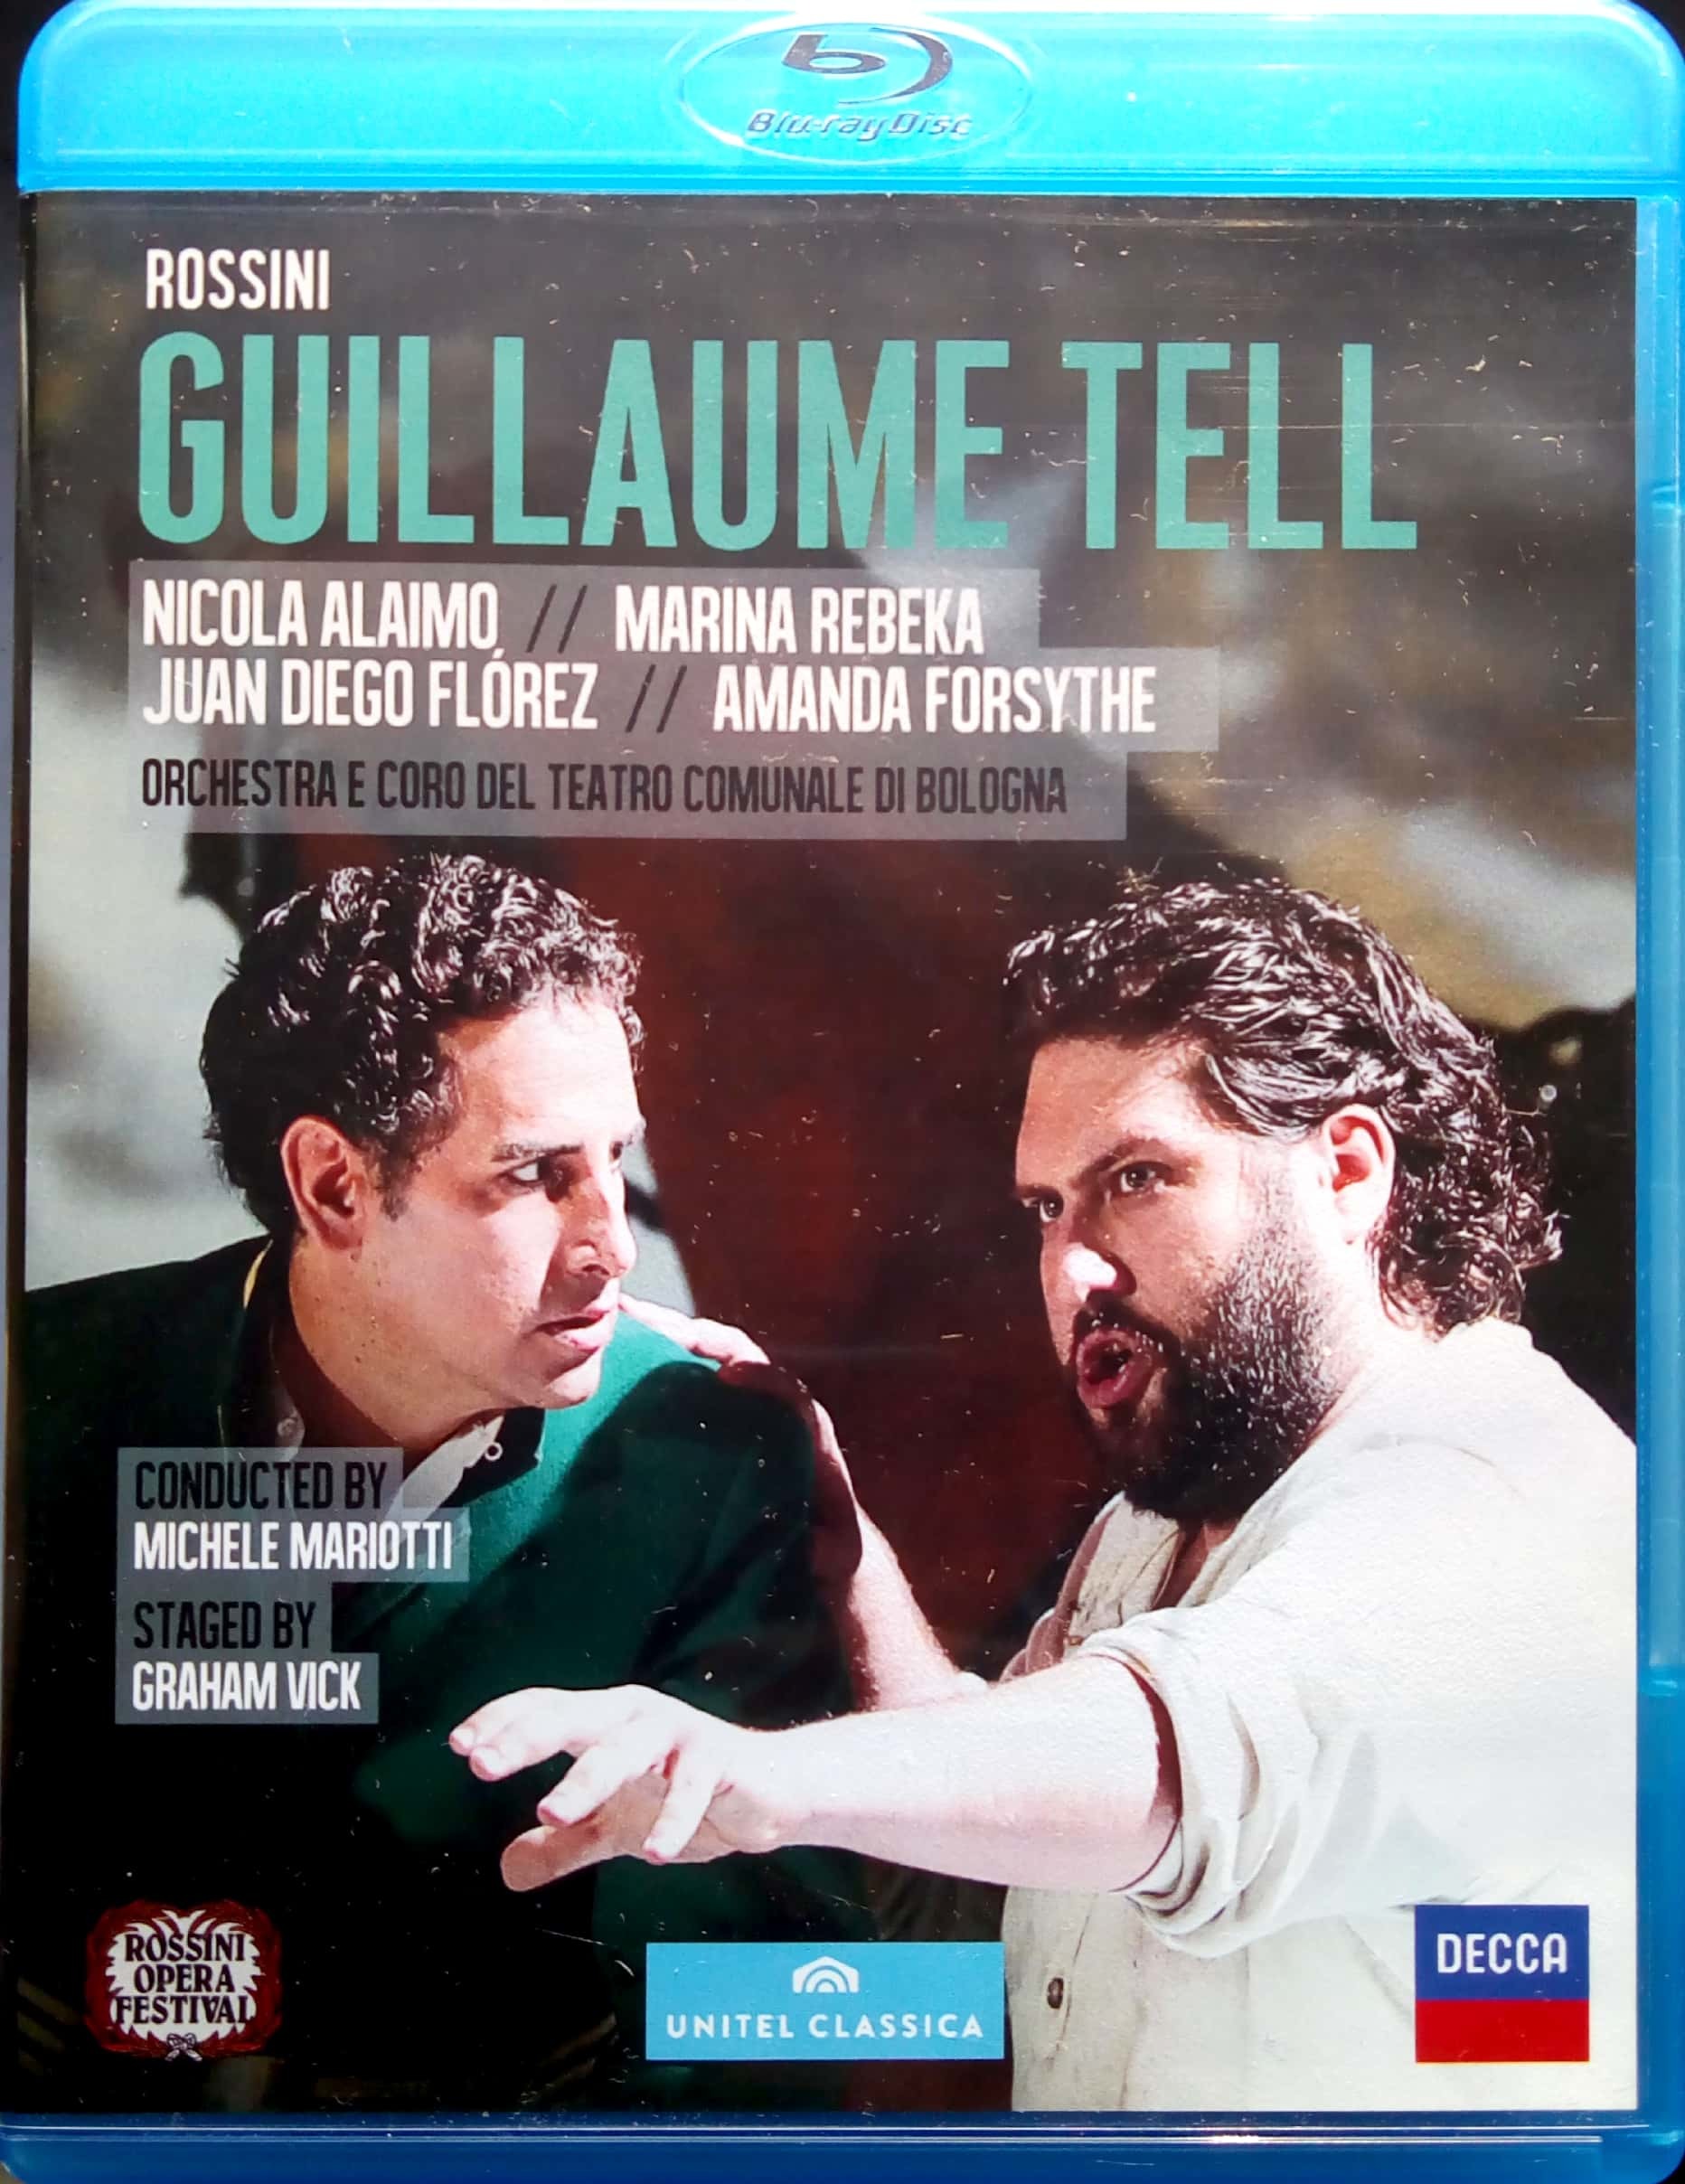 Rossini: Guillaume Tell Blu-ray (Rossini Opera Festival) (Italy)